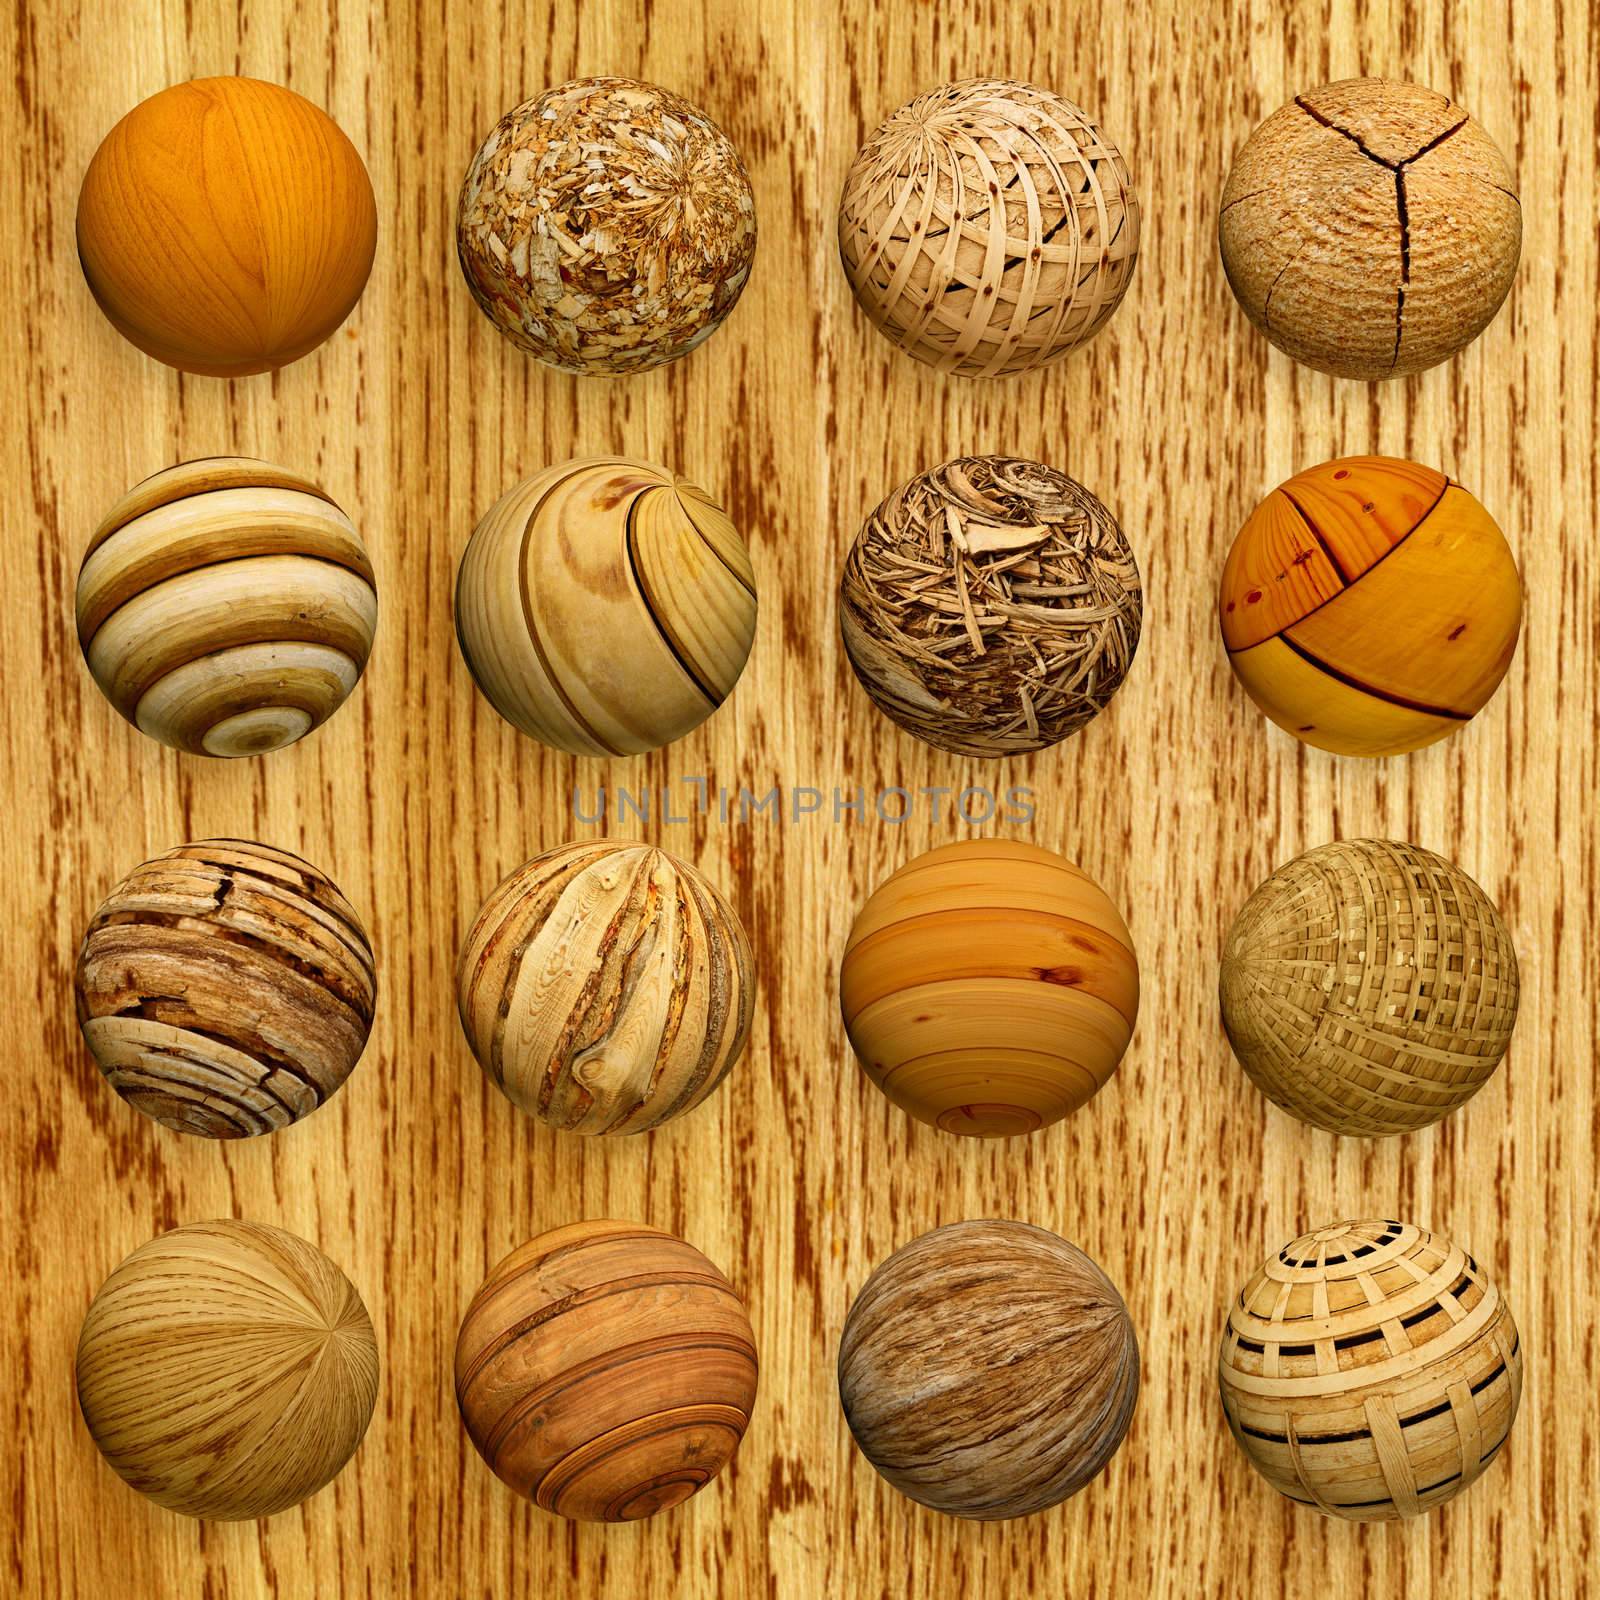 A set of wooden balls against veneer - collage